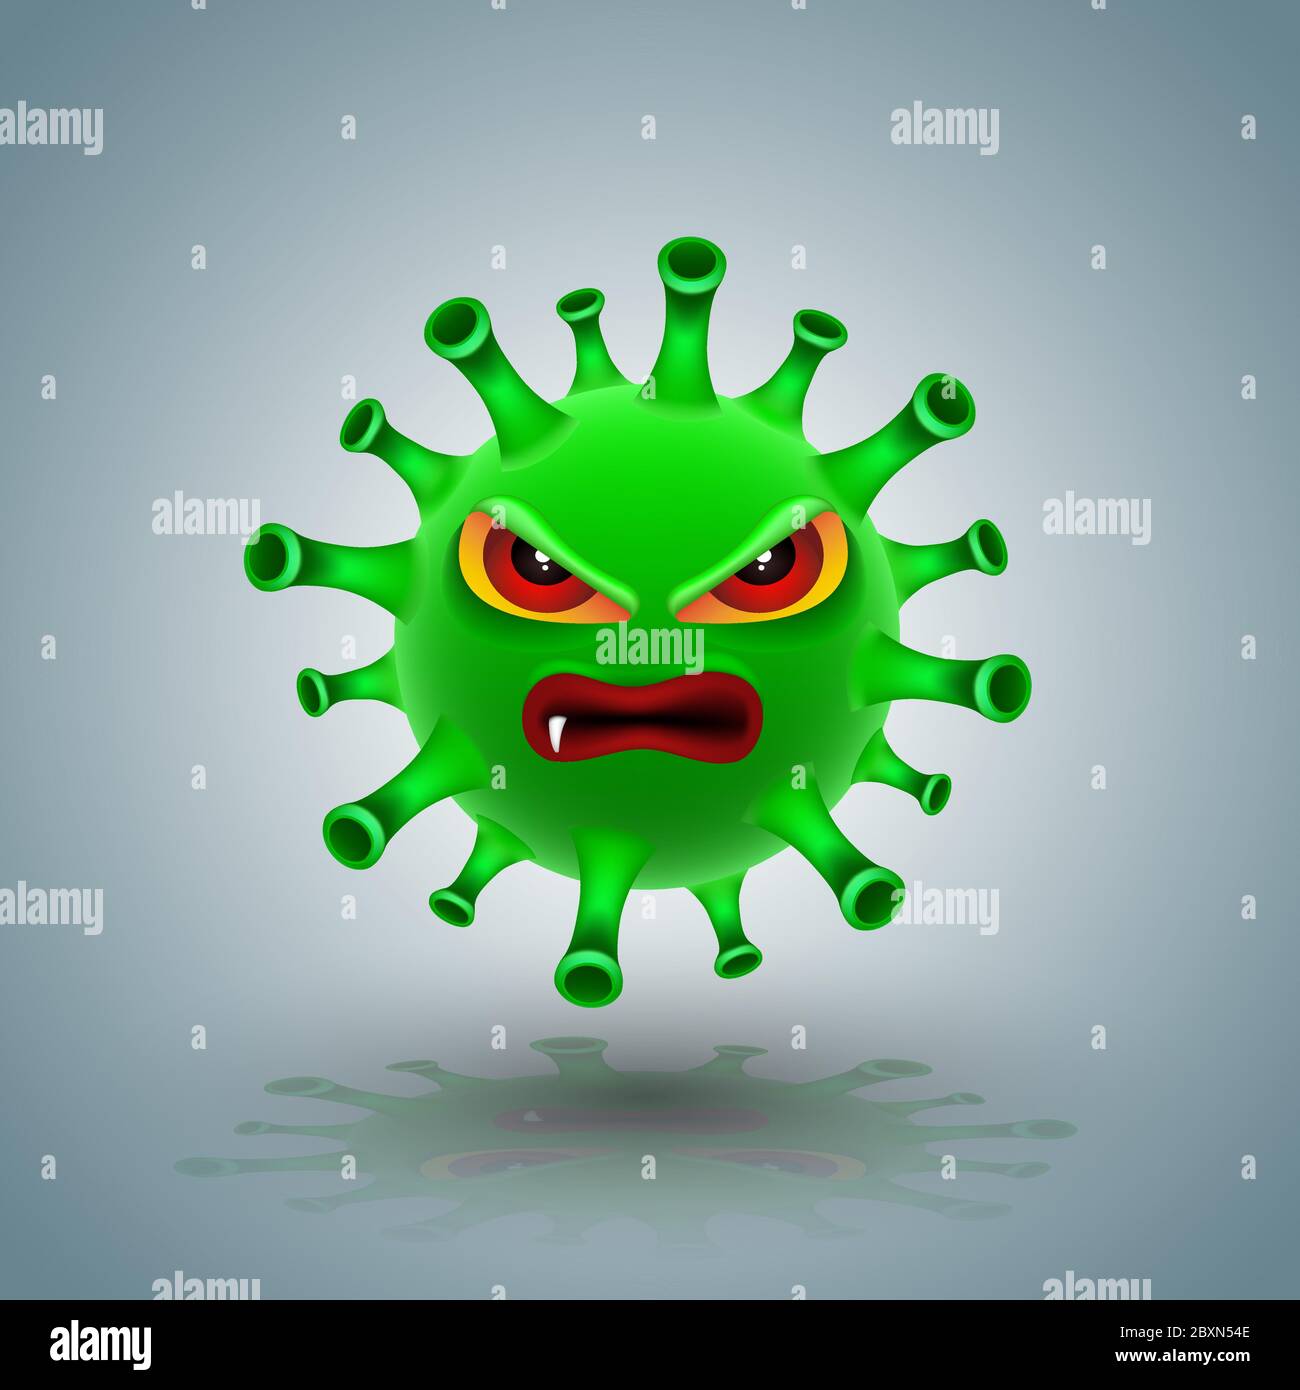 Coronavirus Charakter Vektor Illustration für Krankheit covid-19 Infektion medizinische. Stock Vektor